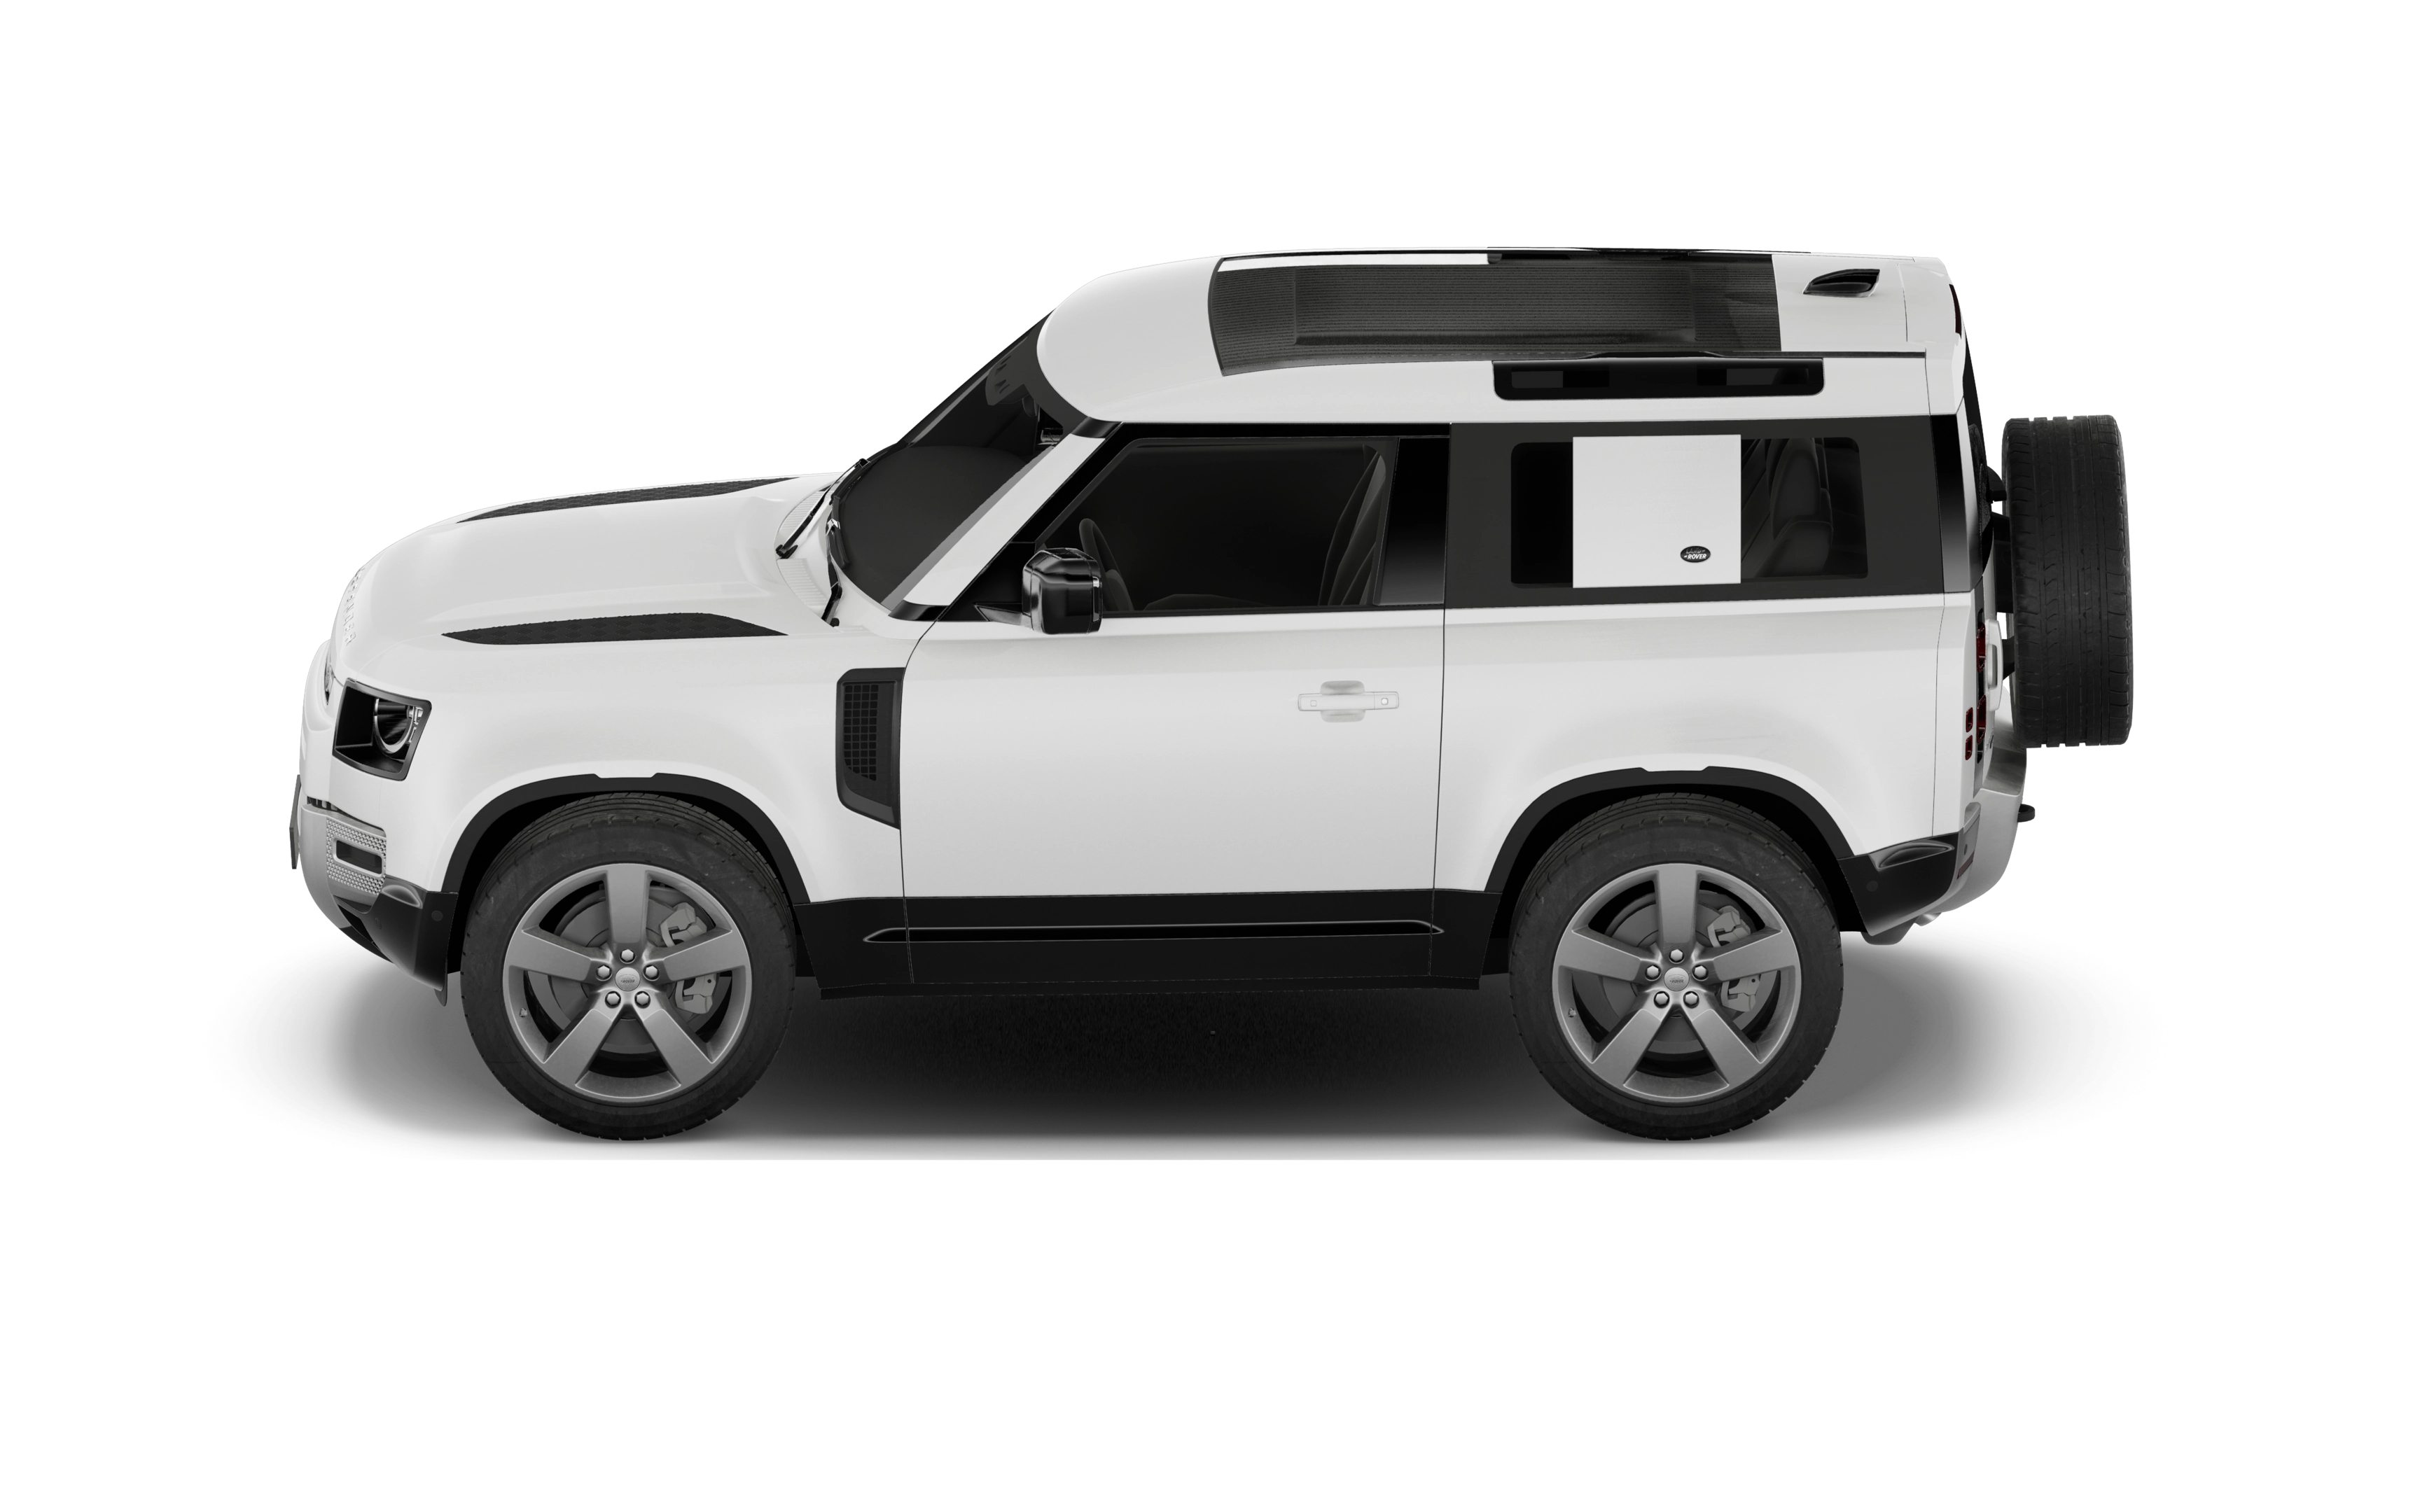 Land rover defender estate 3.0 d300 x-dynamic s 110 5 doors auto [6 seat]